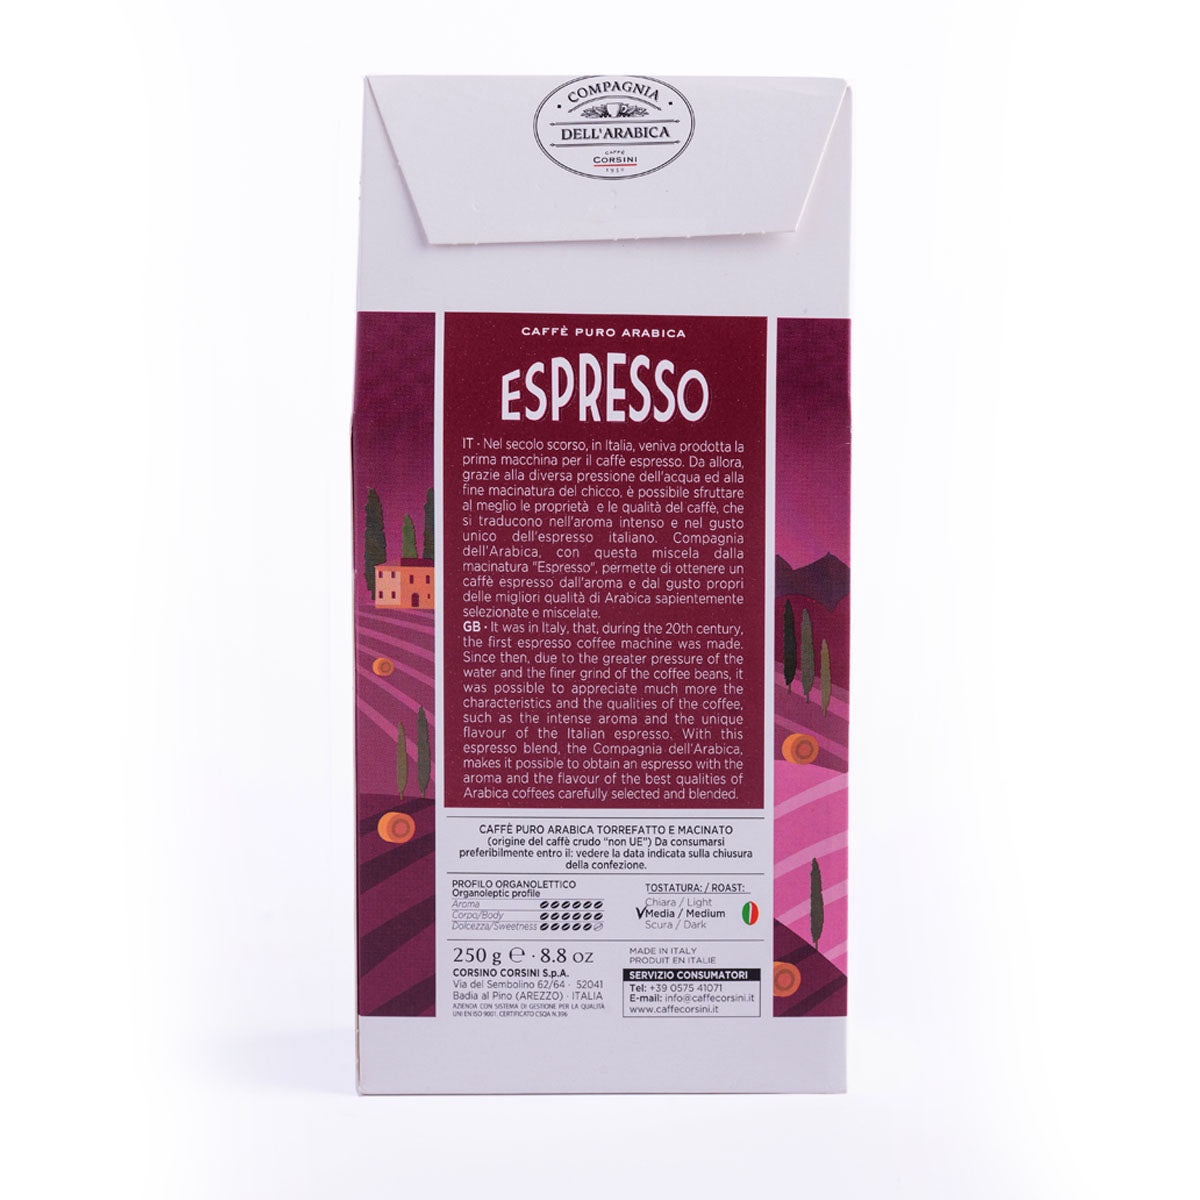 Ground coffee, espresso, 100% arabica, 250g